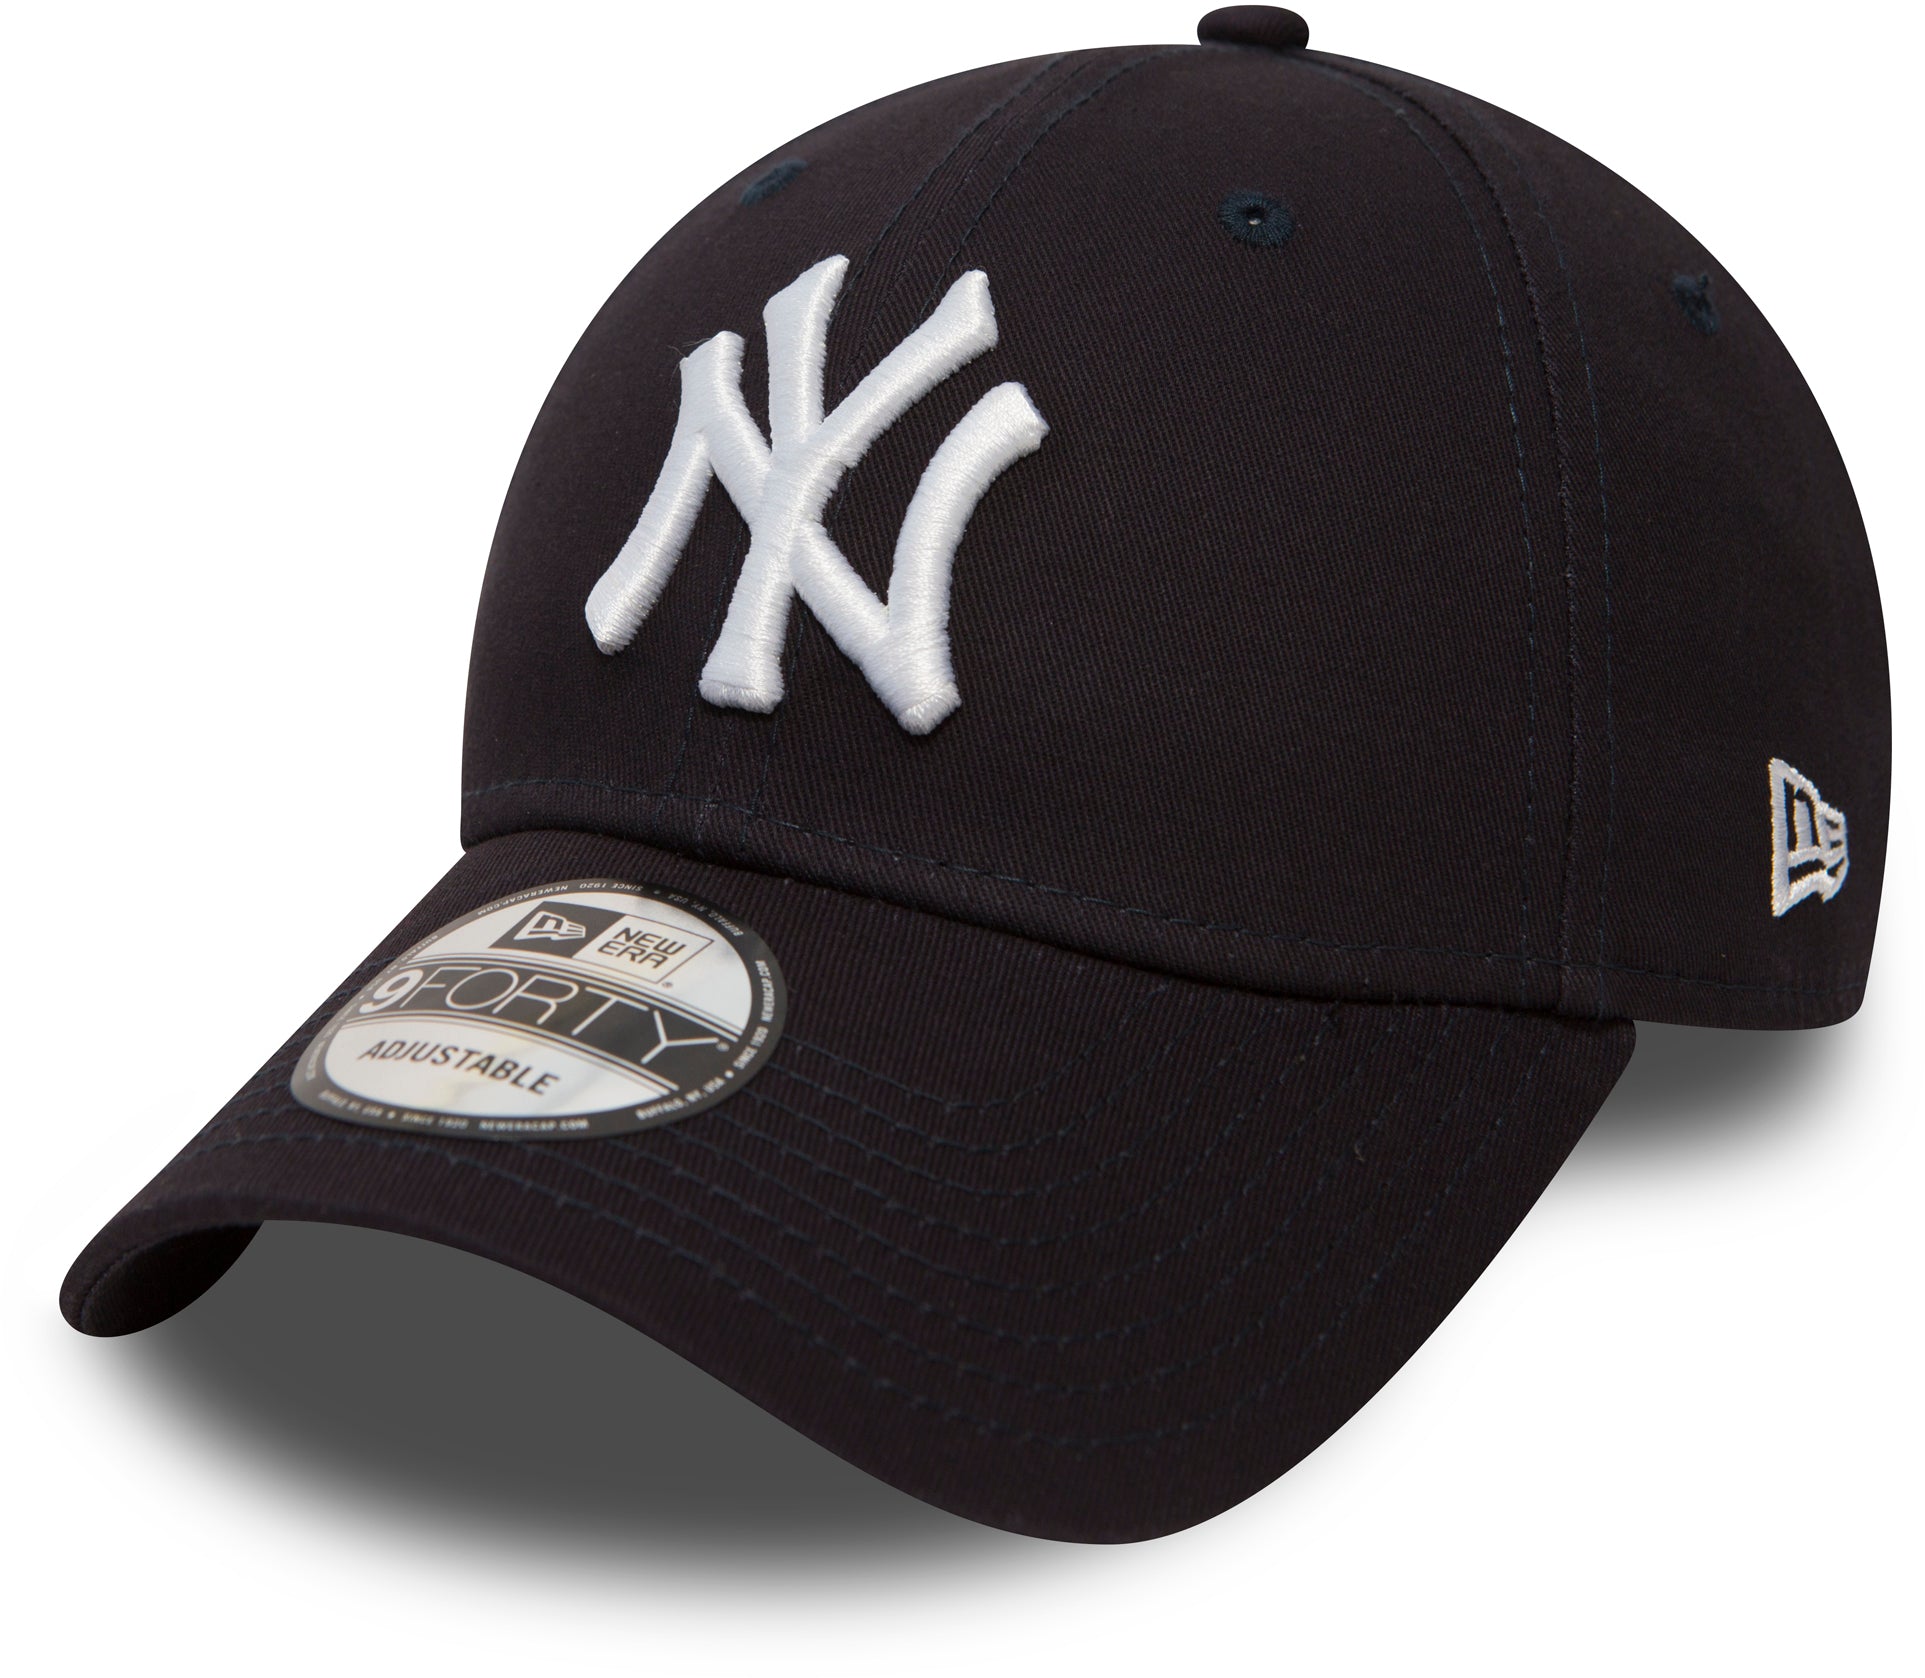 Seattle Mariners Hat Cap Mens Adjustable Strap Blue New Era MLB